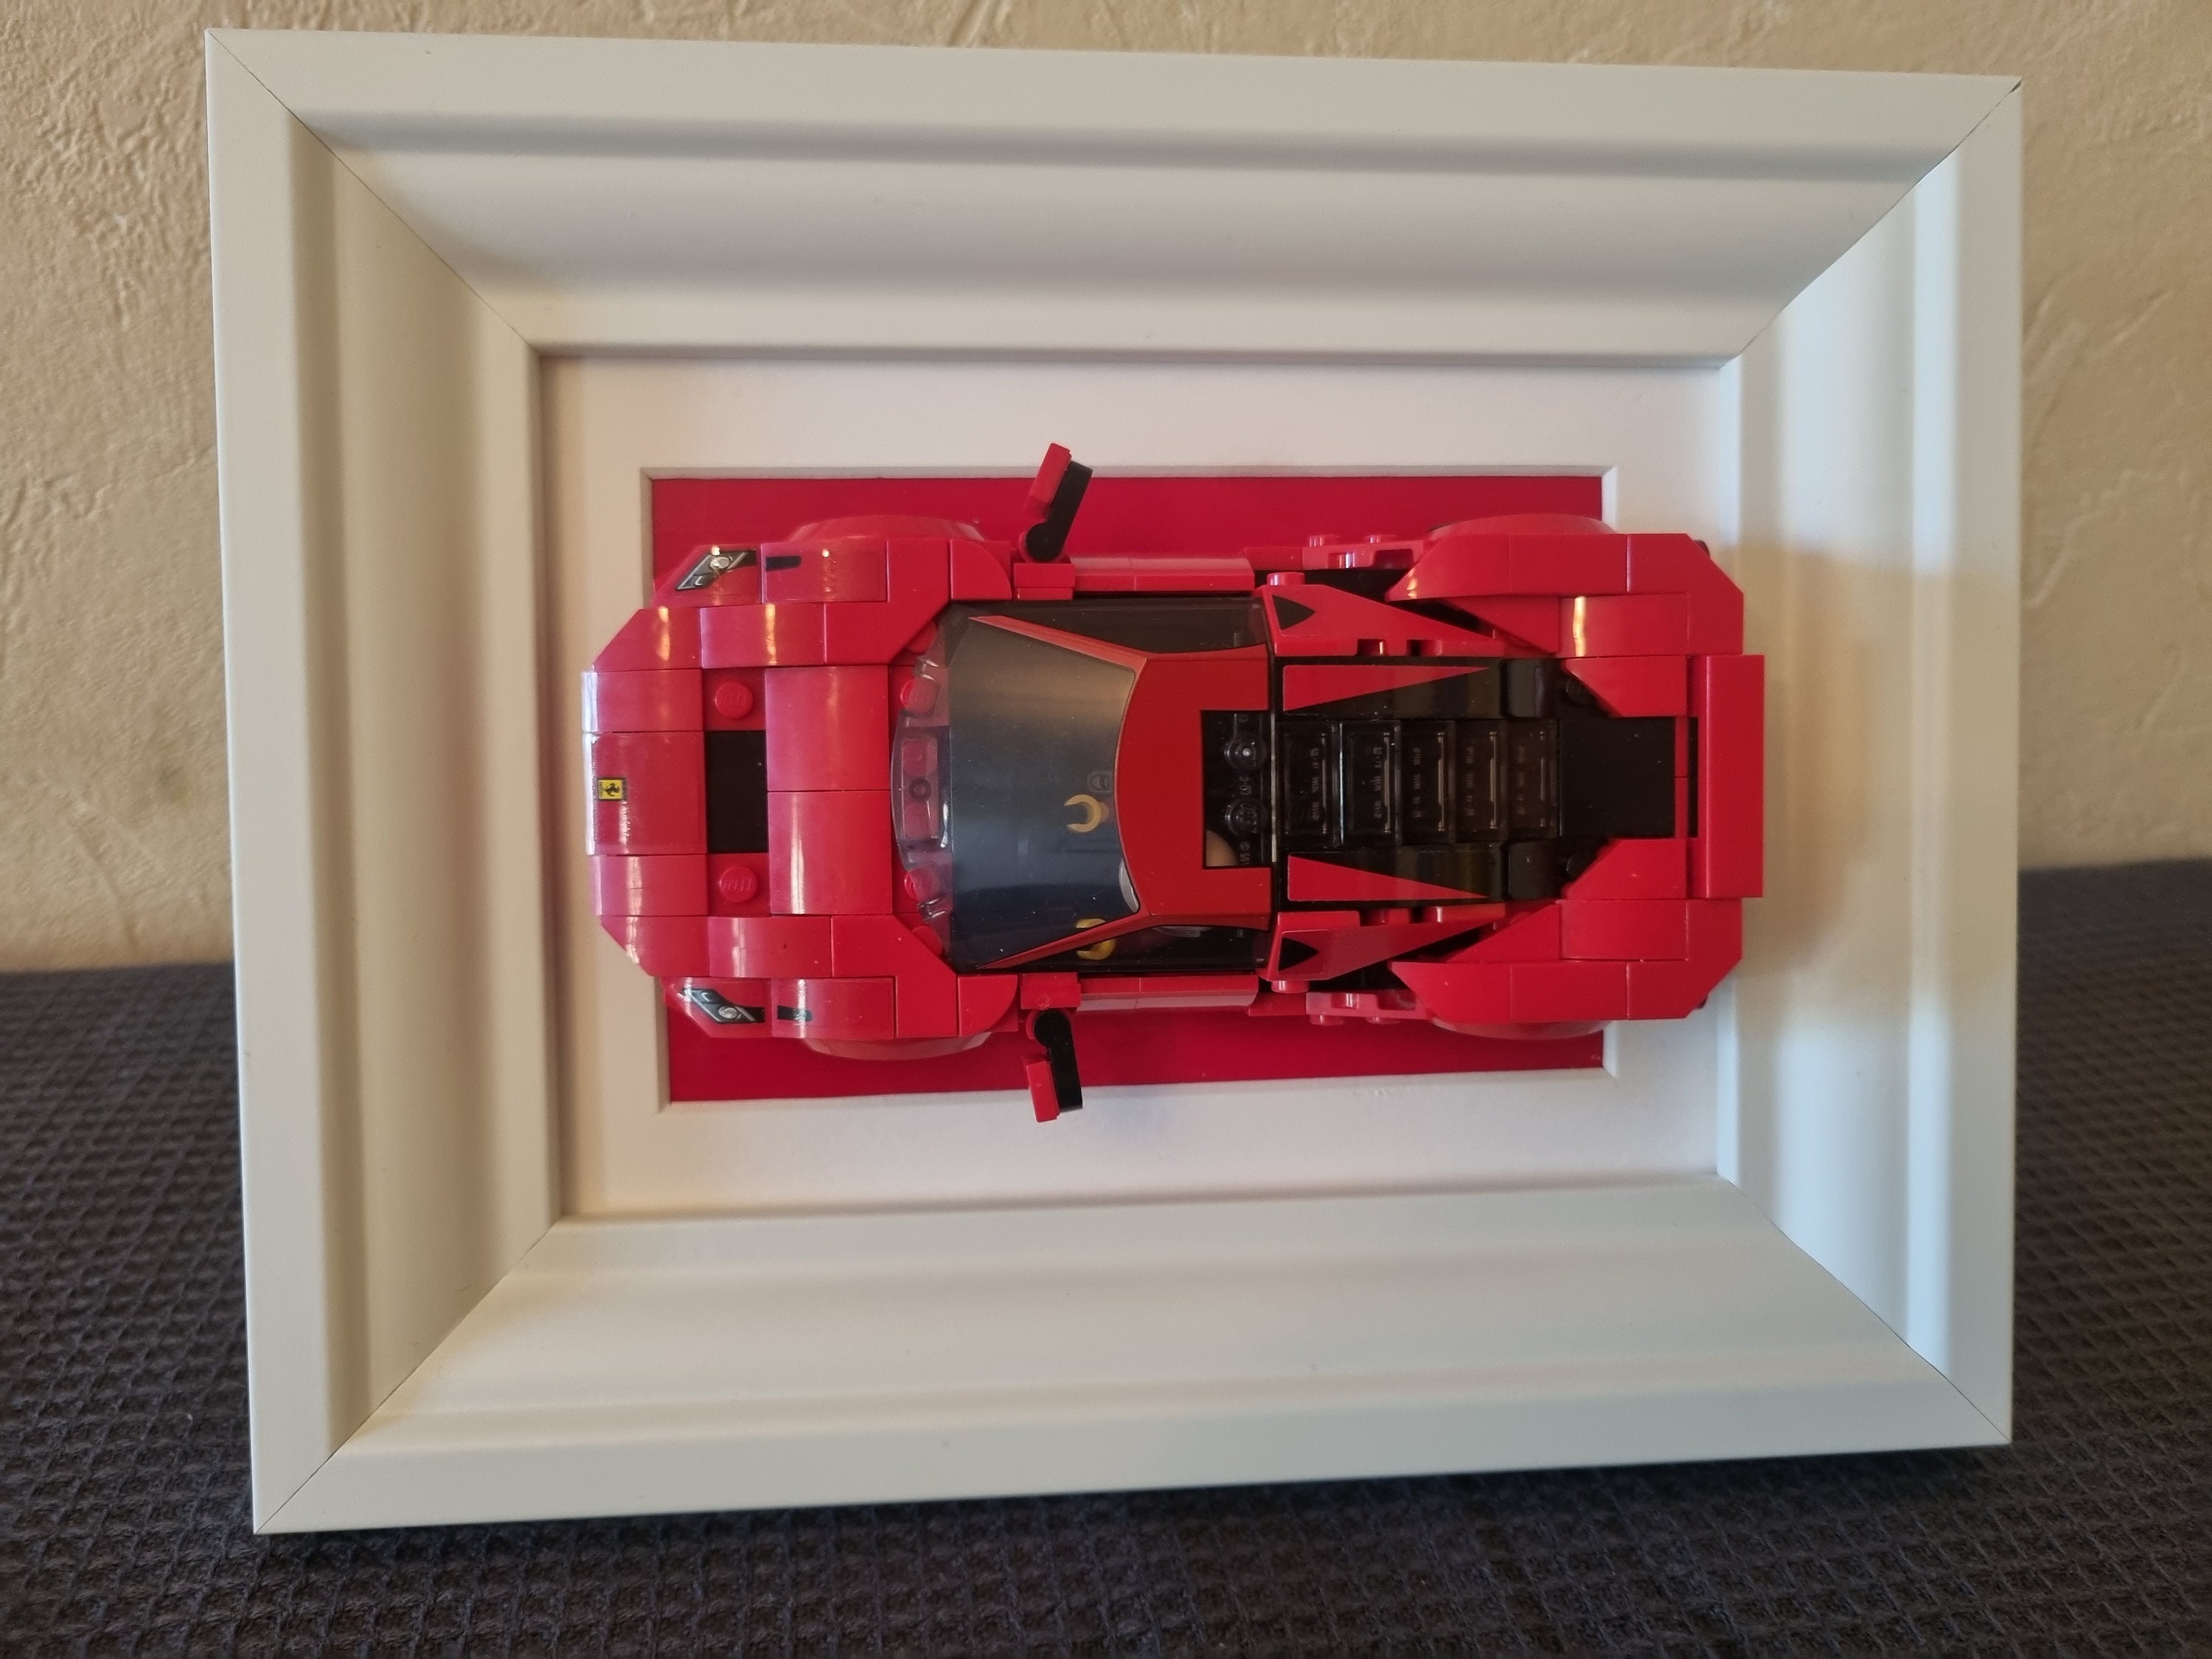 Speed Champions Ferrari F8 Tributo, Cadeau Anniversaire et Noël Enf